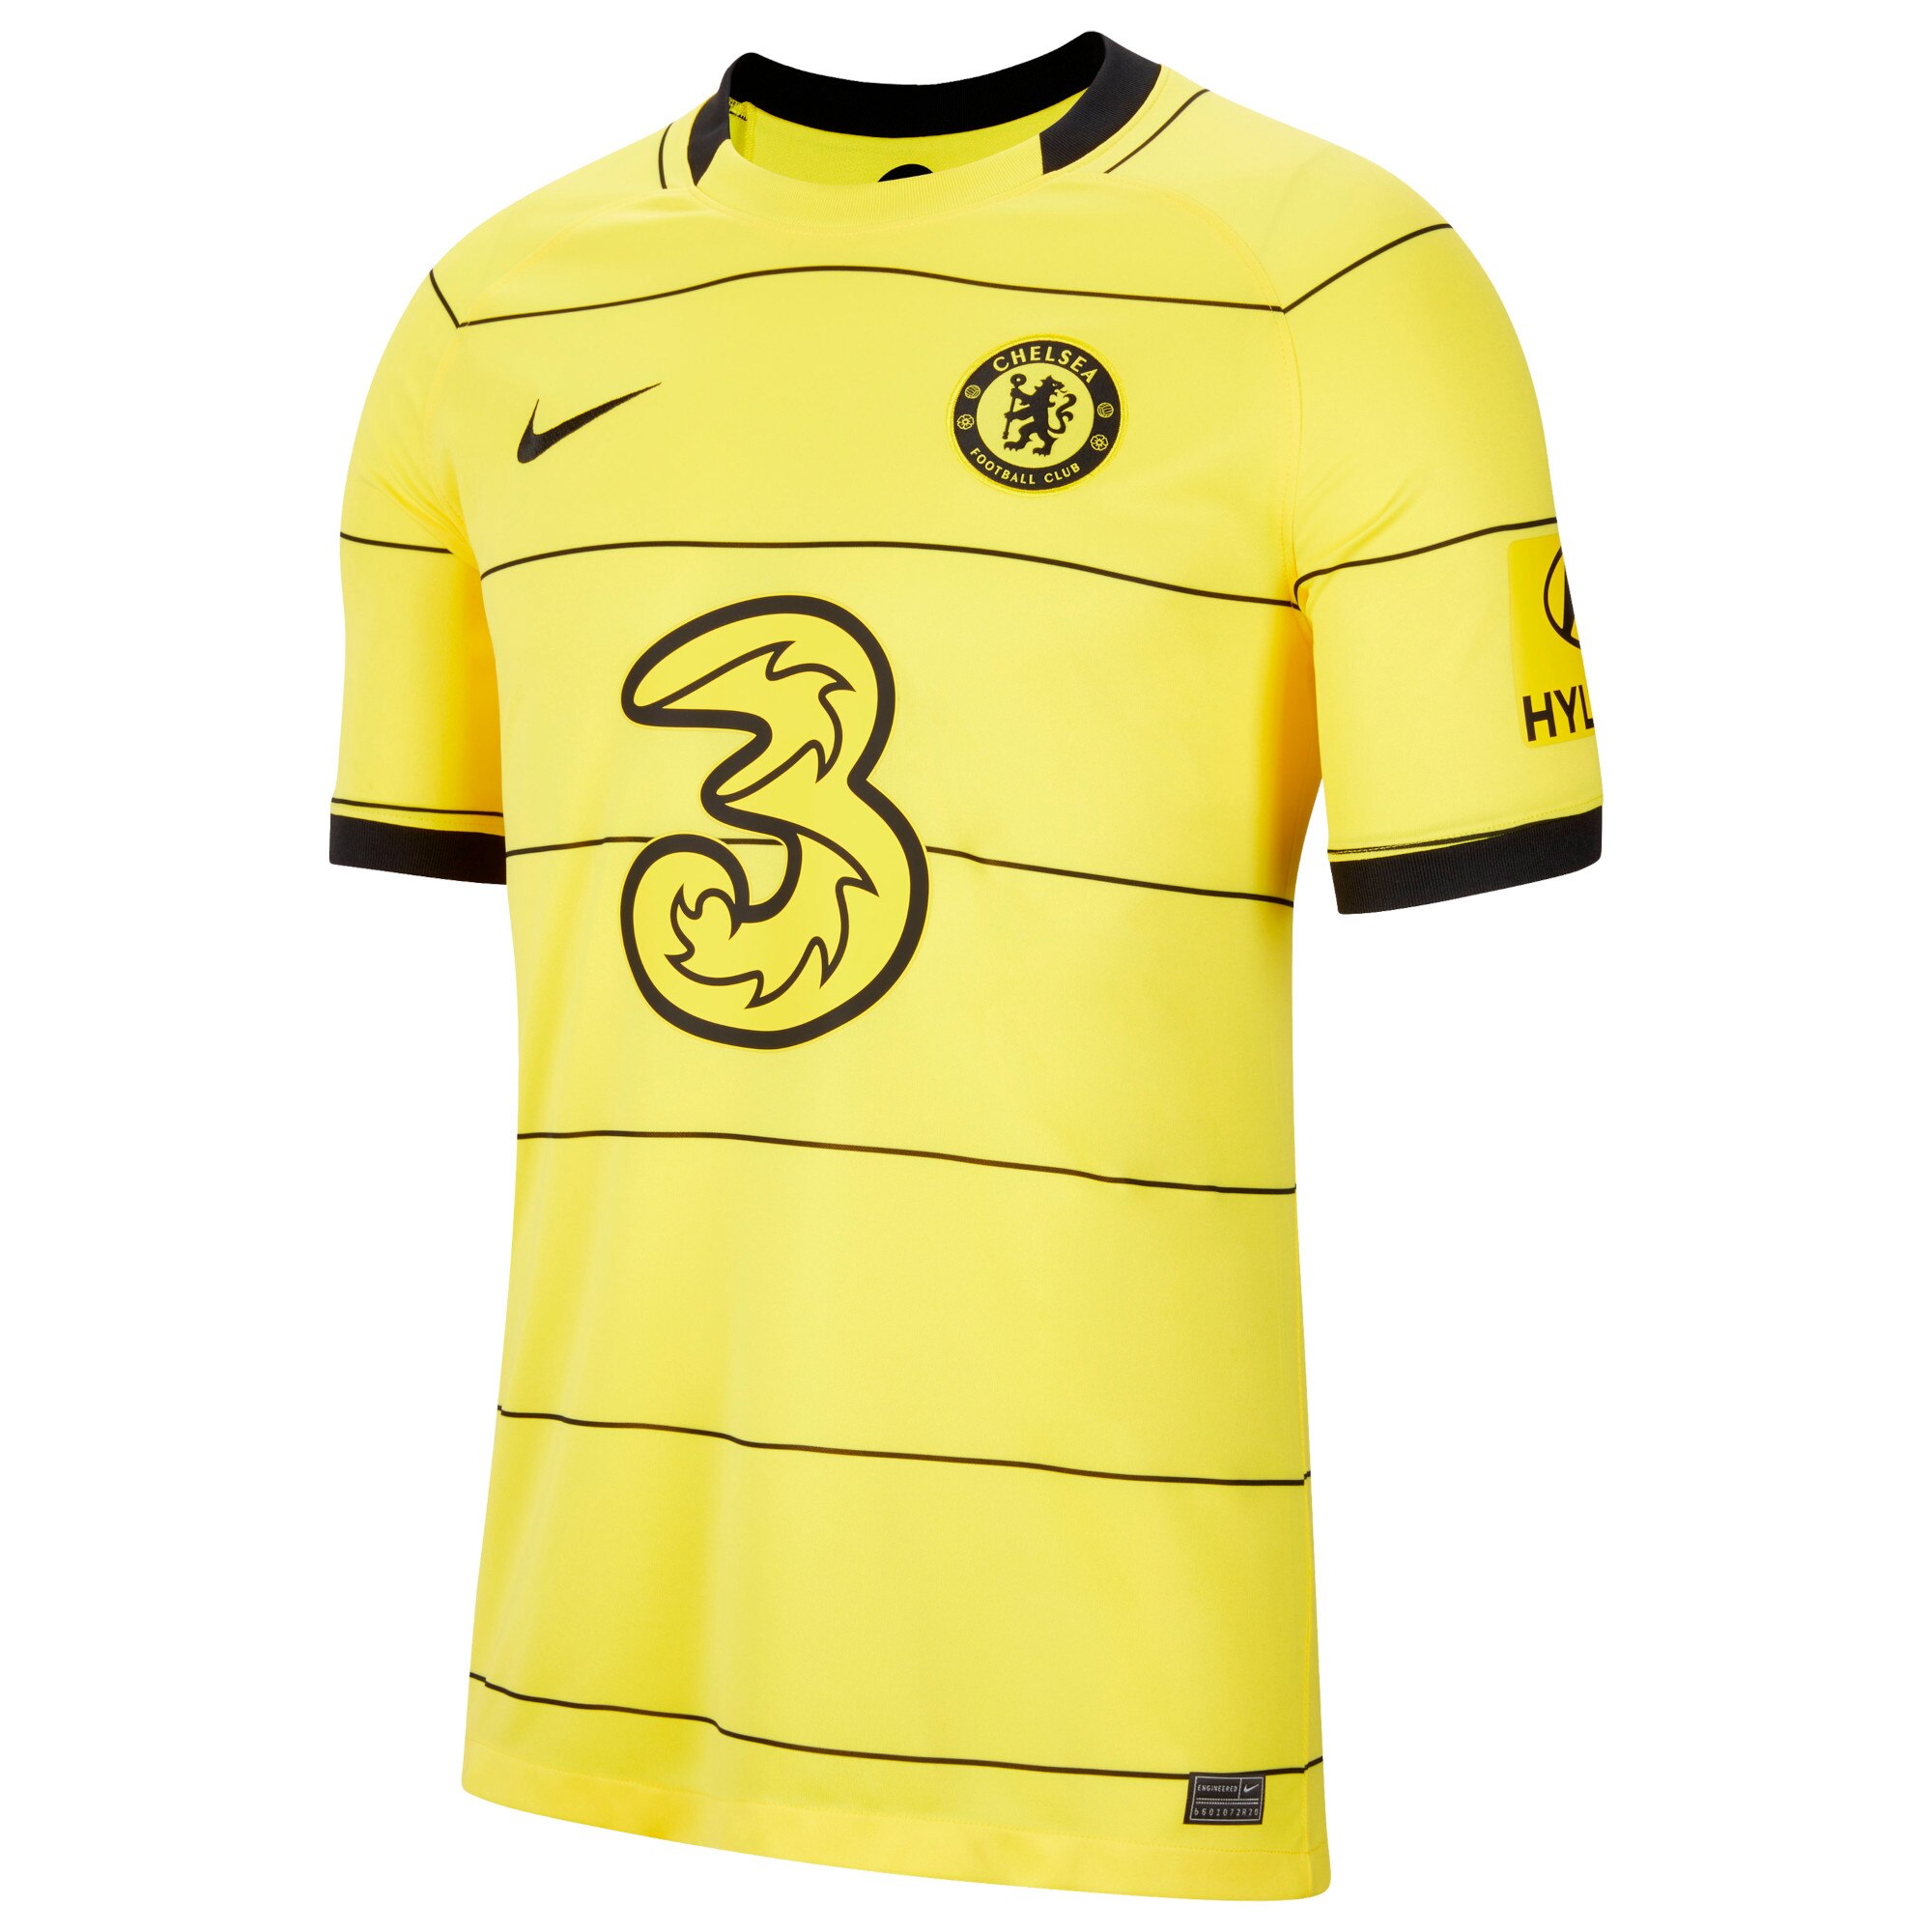 Chelsea Away Stadium Shirt 2021-22 with Chalobah 14 printing